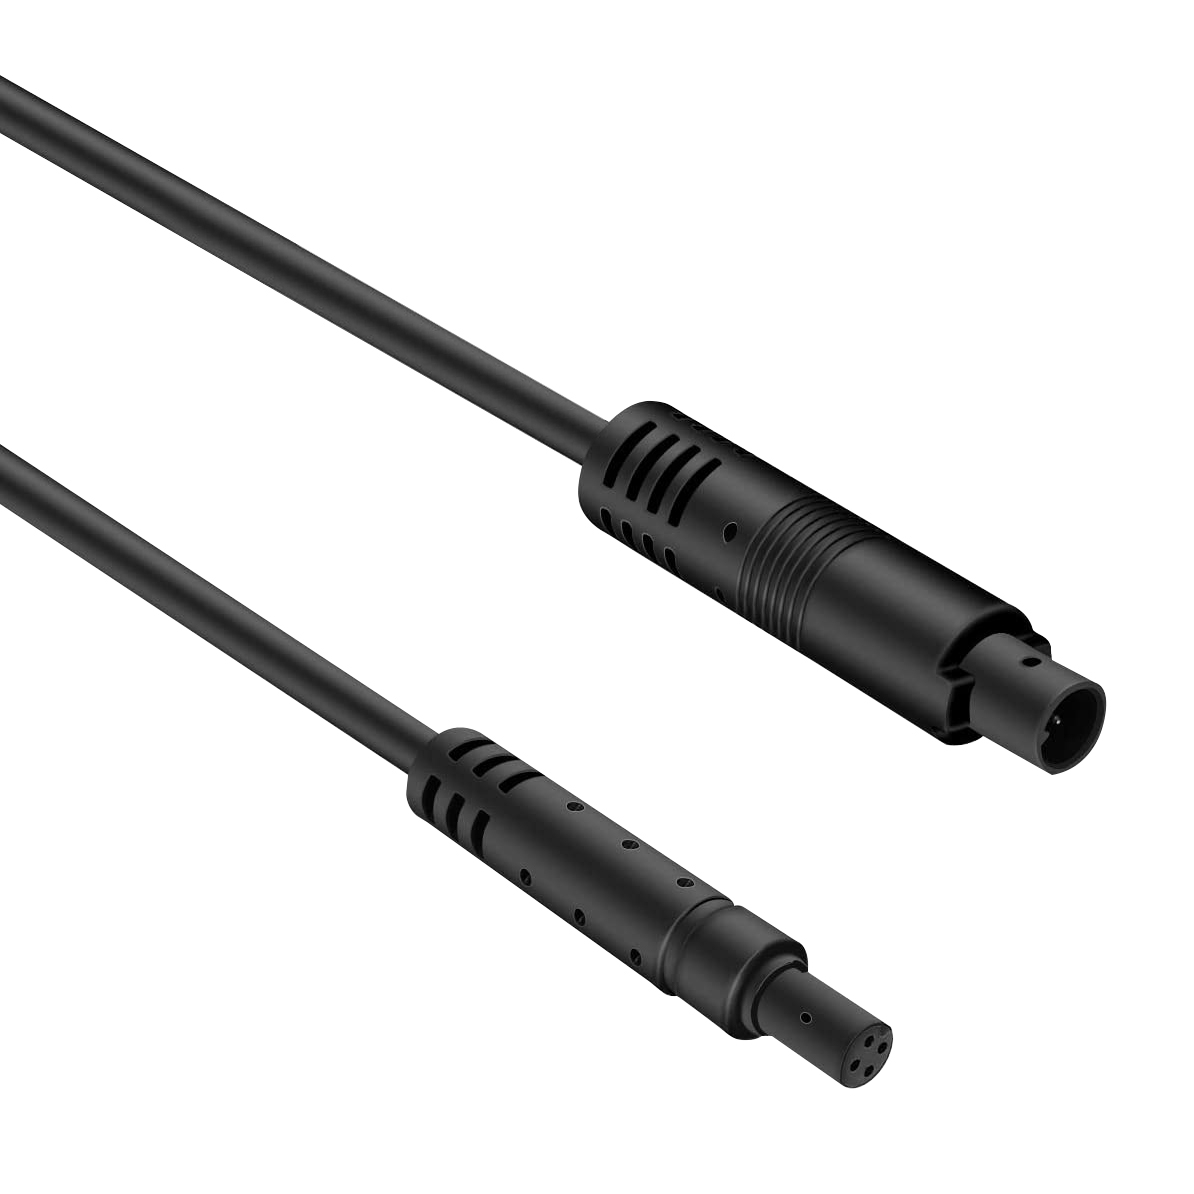 ApaxQ [CBL20] Car camera extension cable 4 pin 2M